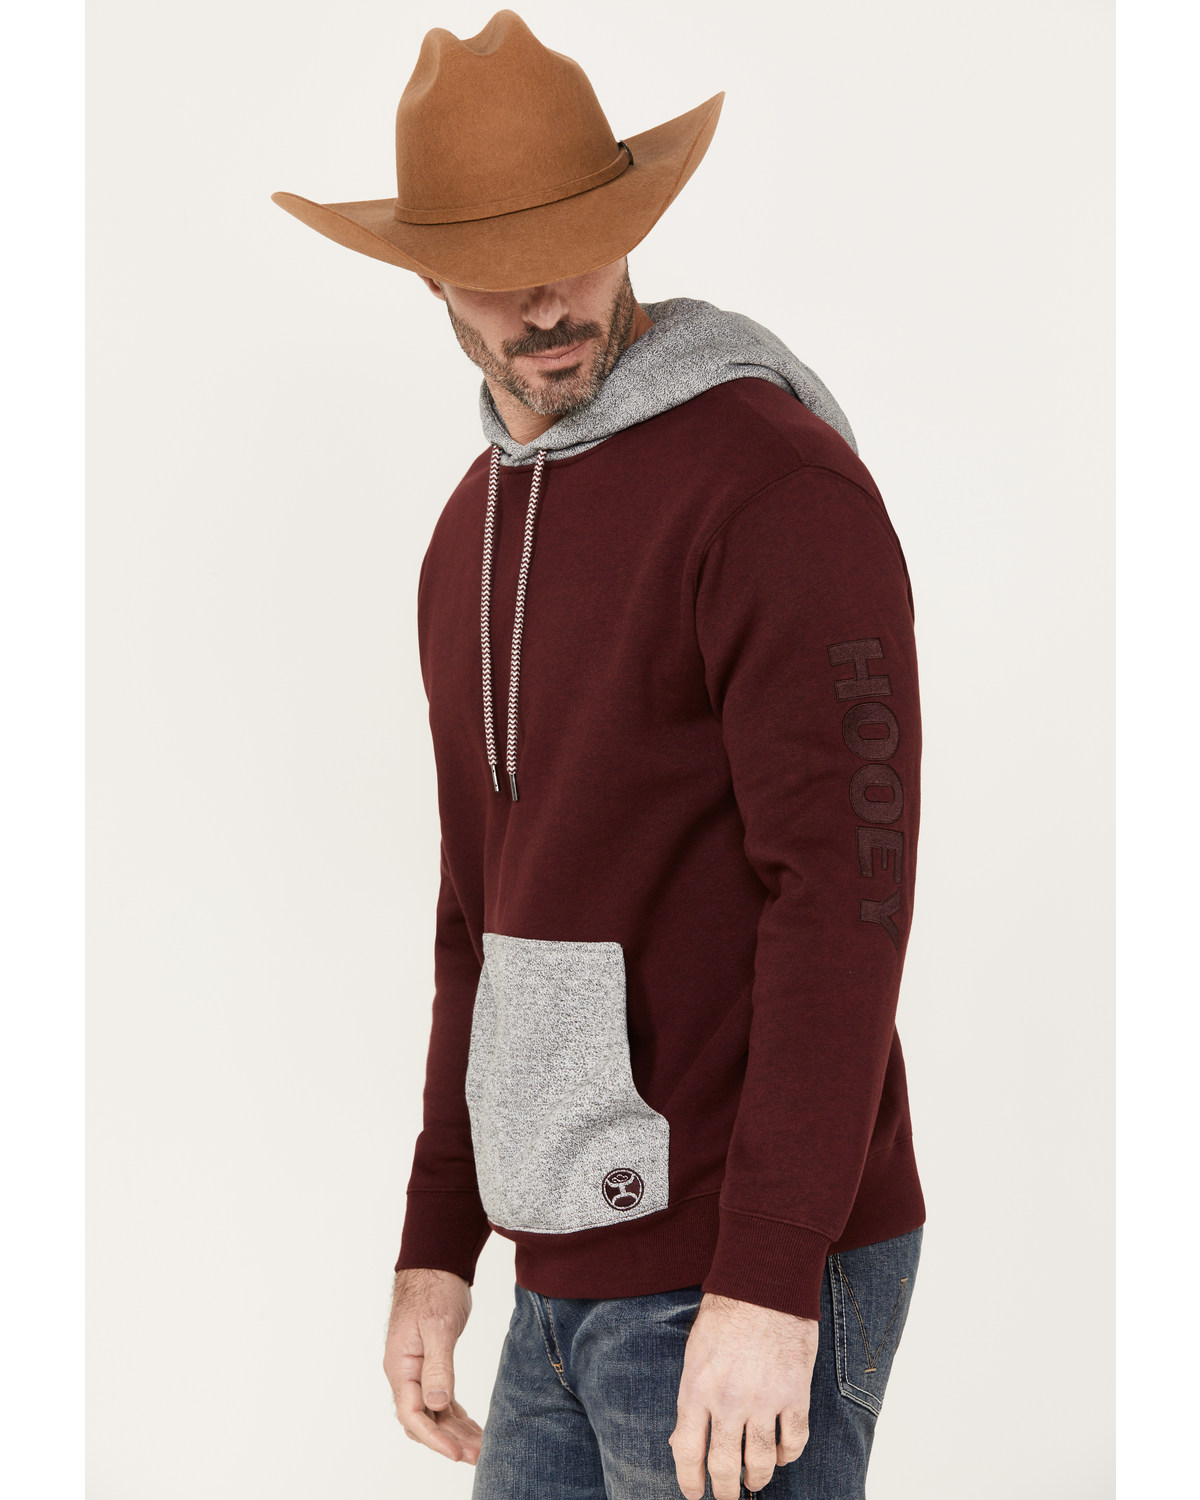 Hooey Men's Tundra Hooded Sweatshirt